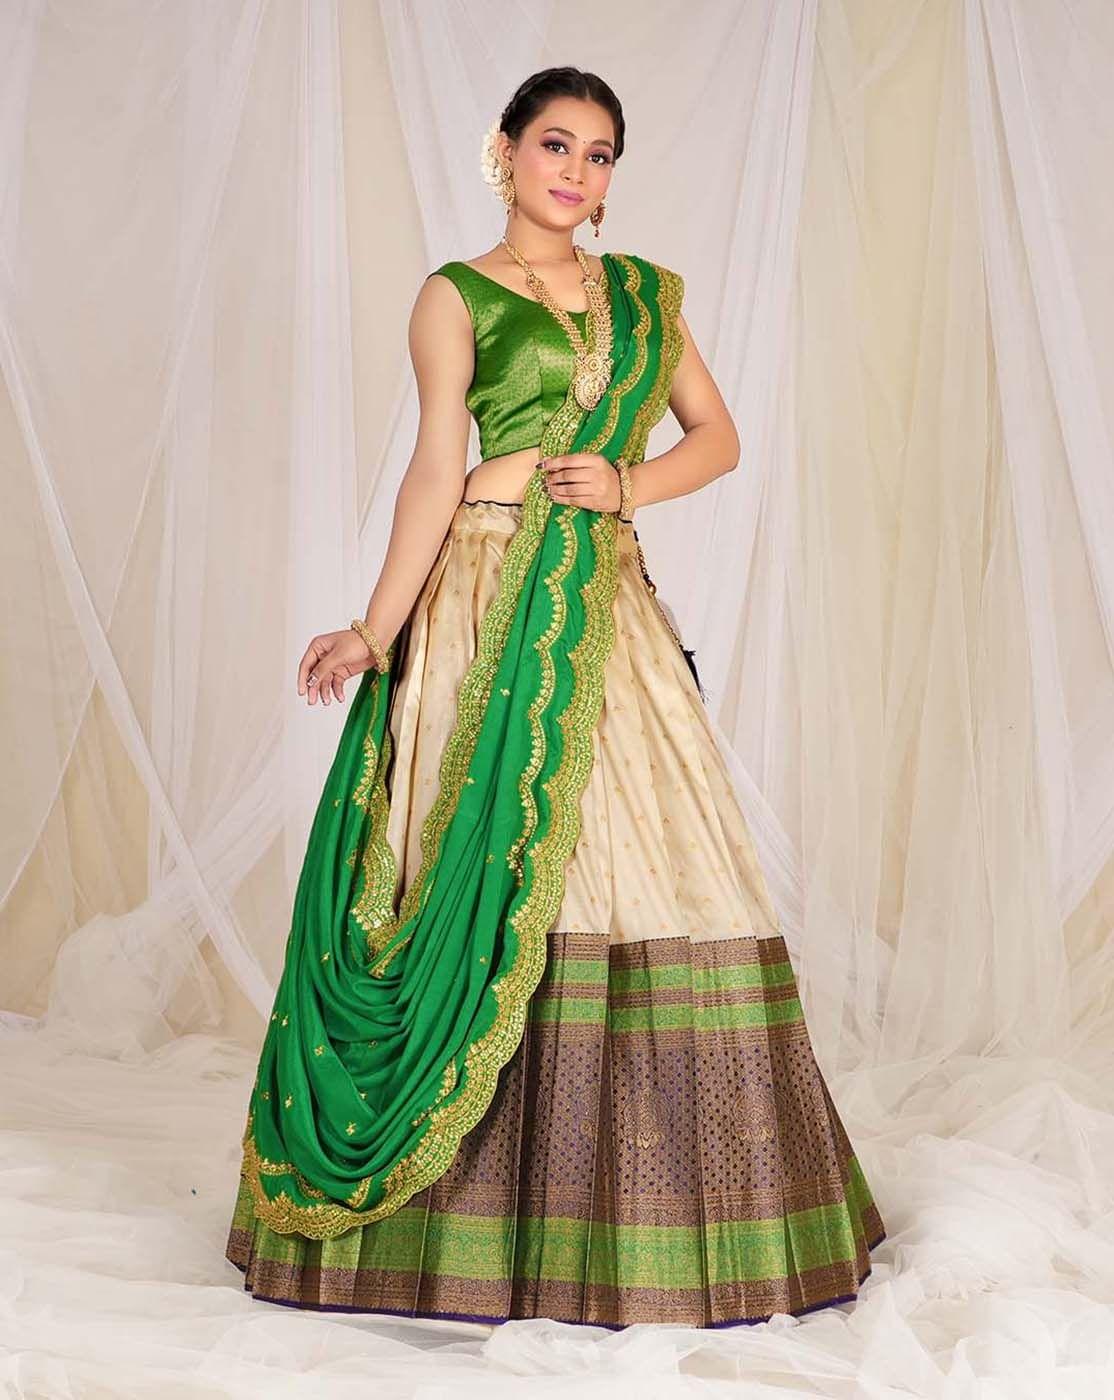 Awesome Pink and Light Green Color Designer Lehenga Choli For Party Looks |  Simple lehenga, Lehenga saree design, Wedding lehenga designs